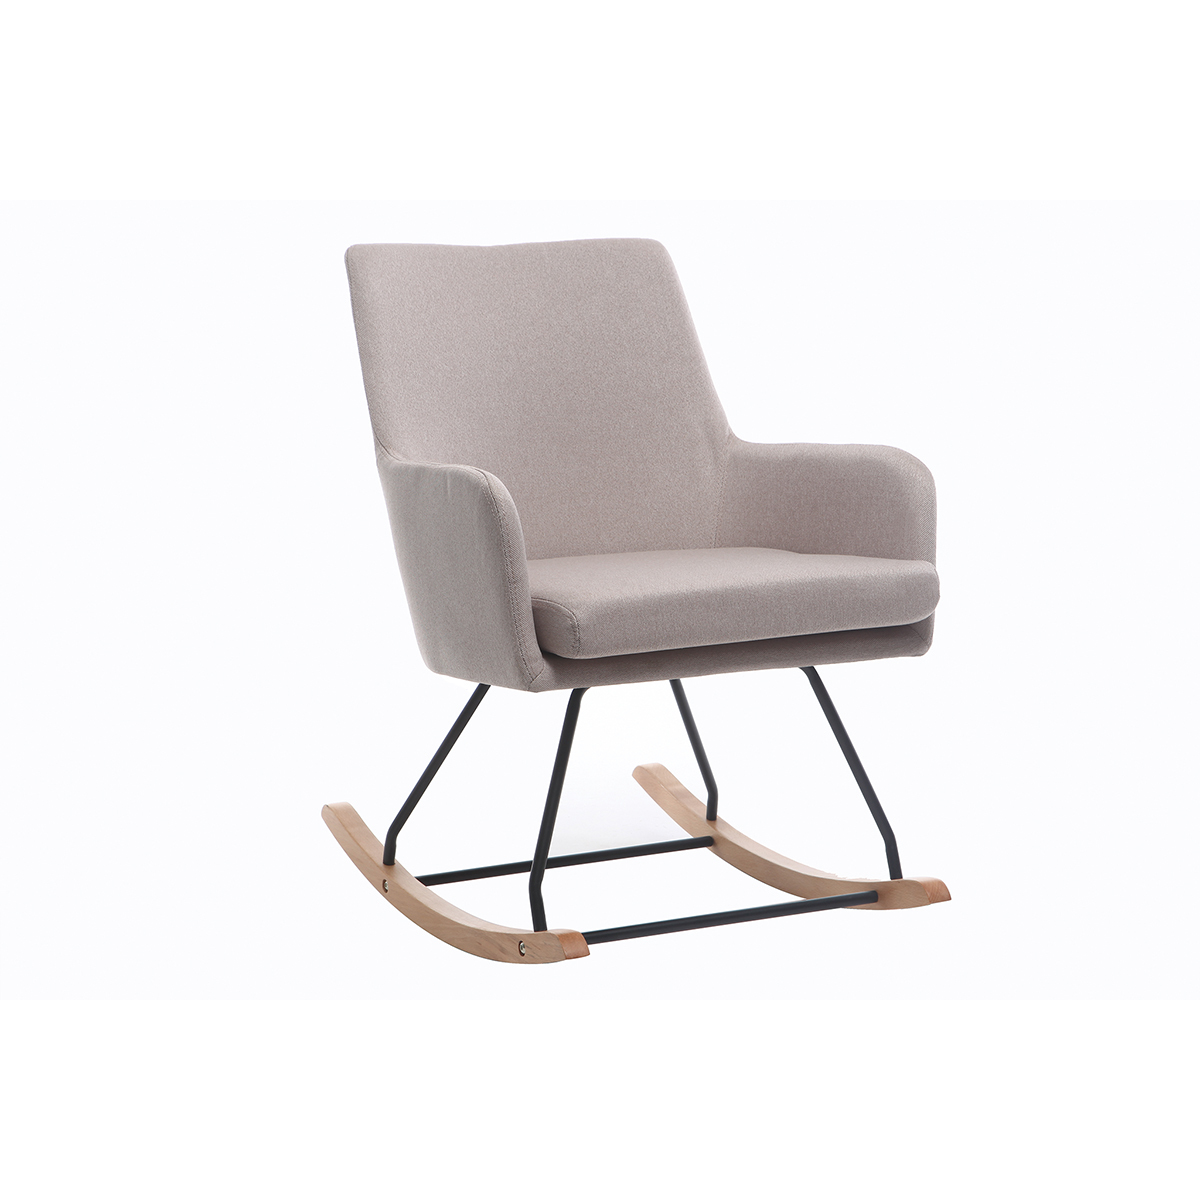 Fauteuil rocking chair design tissu naturel SHANA vue1